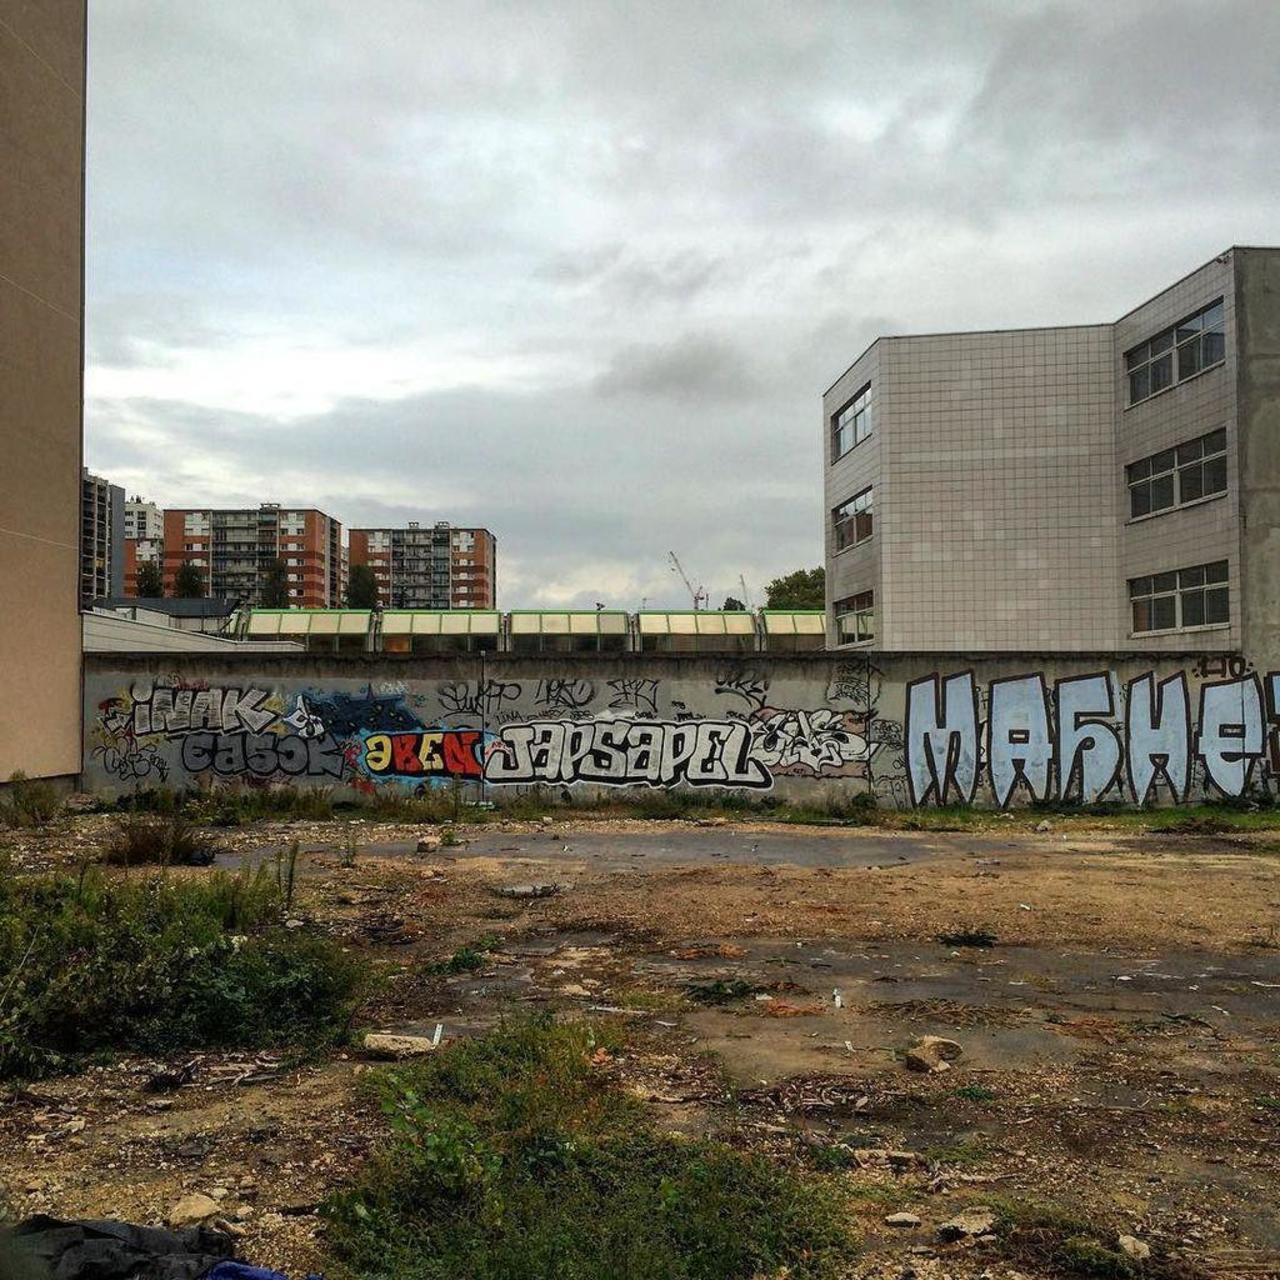 Terrain vague  #streetart #streetartparis #latergram #parisstreetart #auxportesdeparis #paname #graffiti #periph b… https://t.co/06zL6Yr7a3